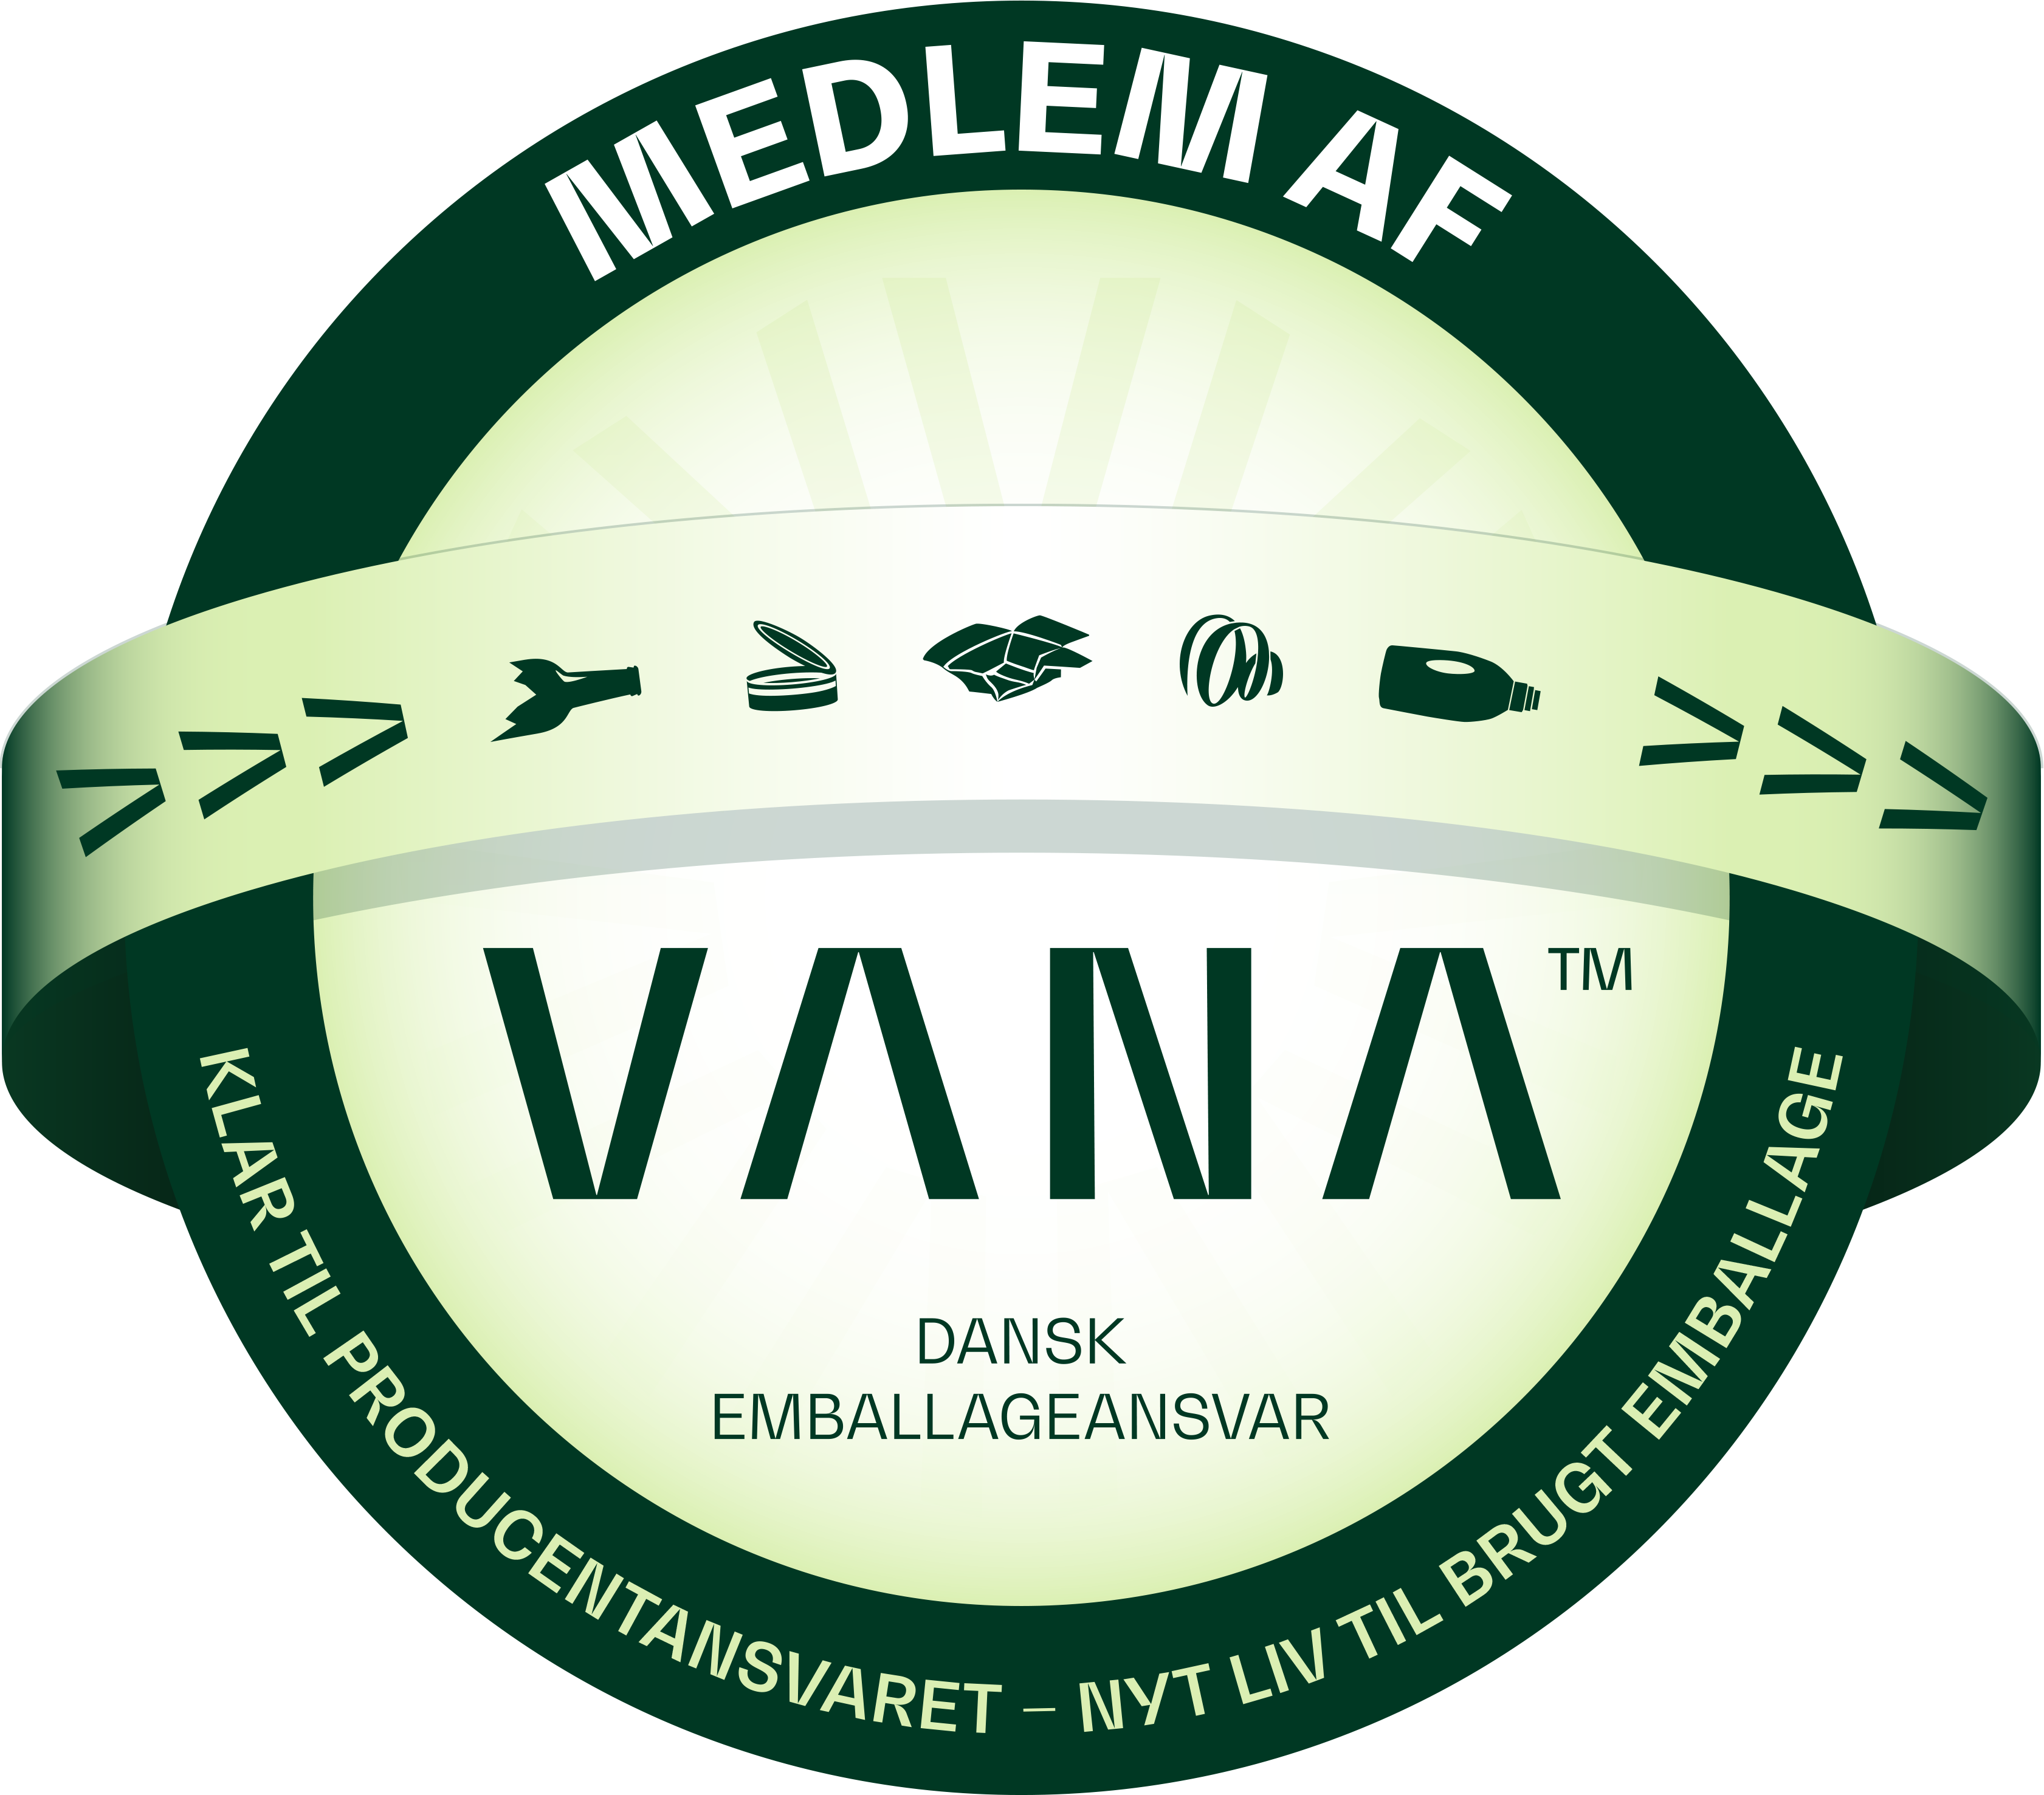 Cooperation with VANA